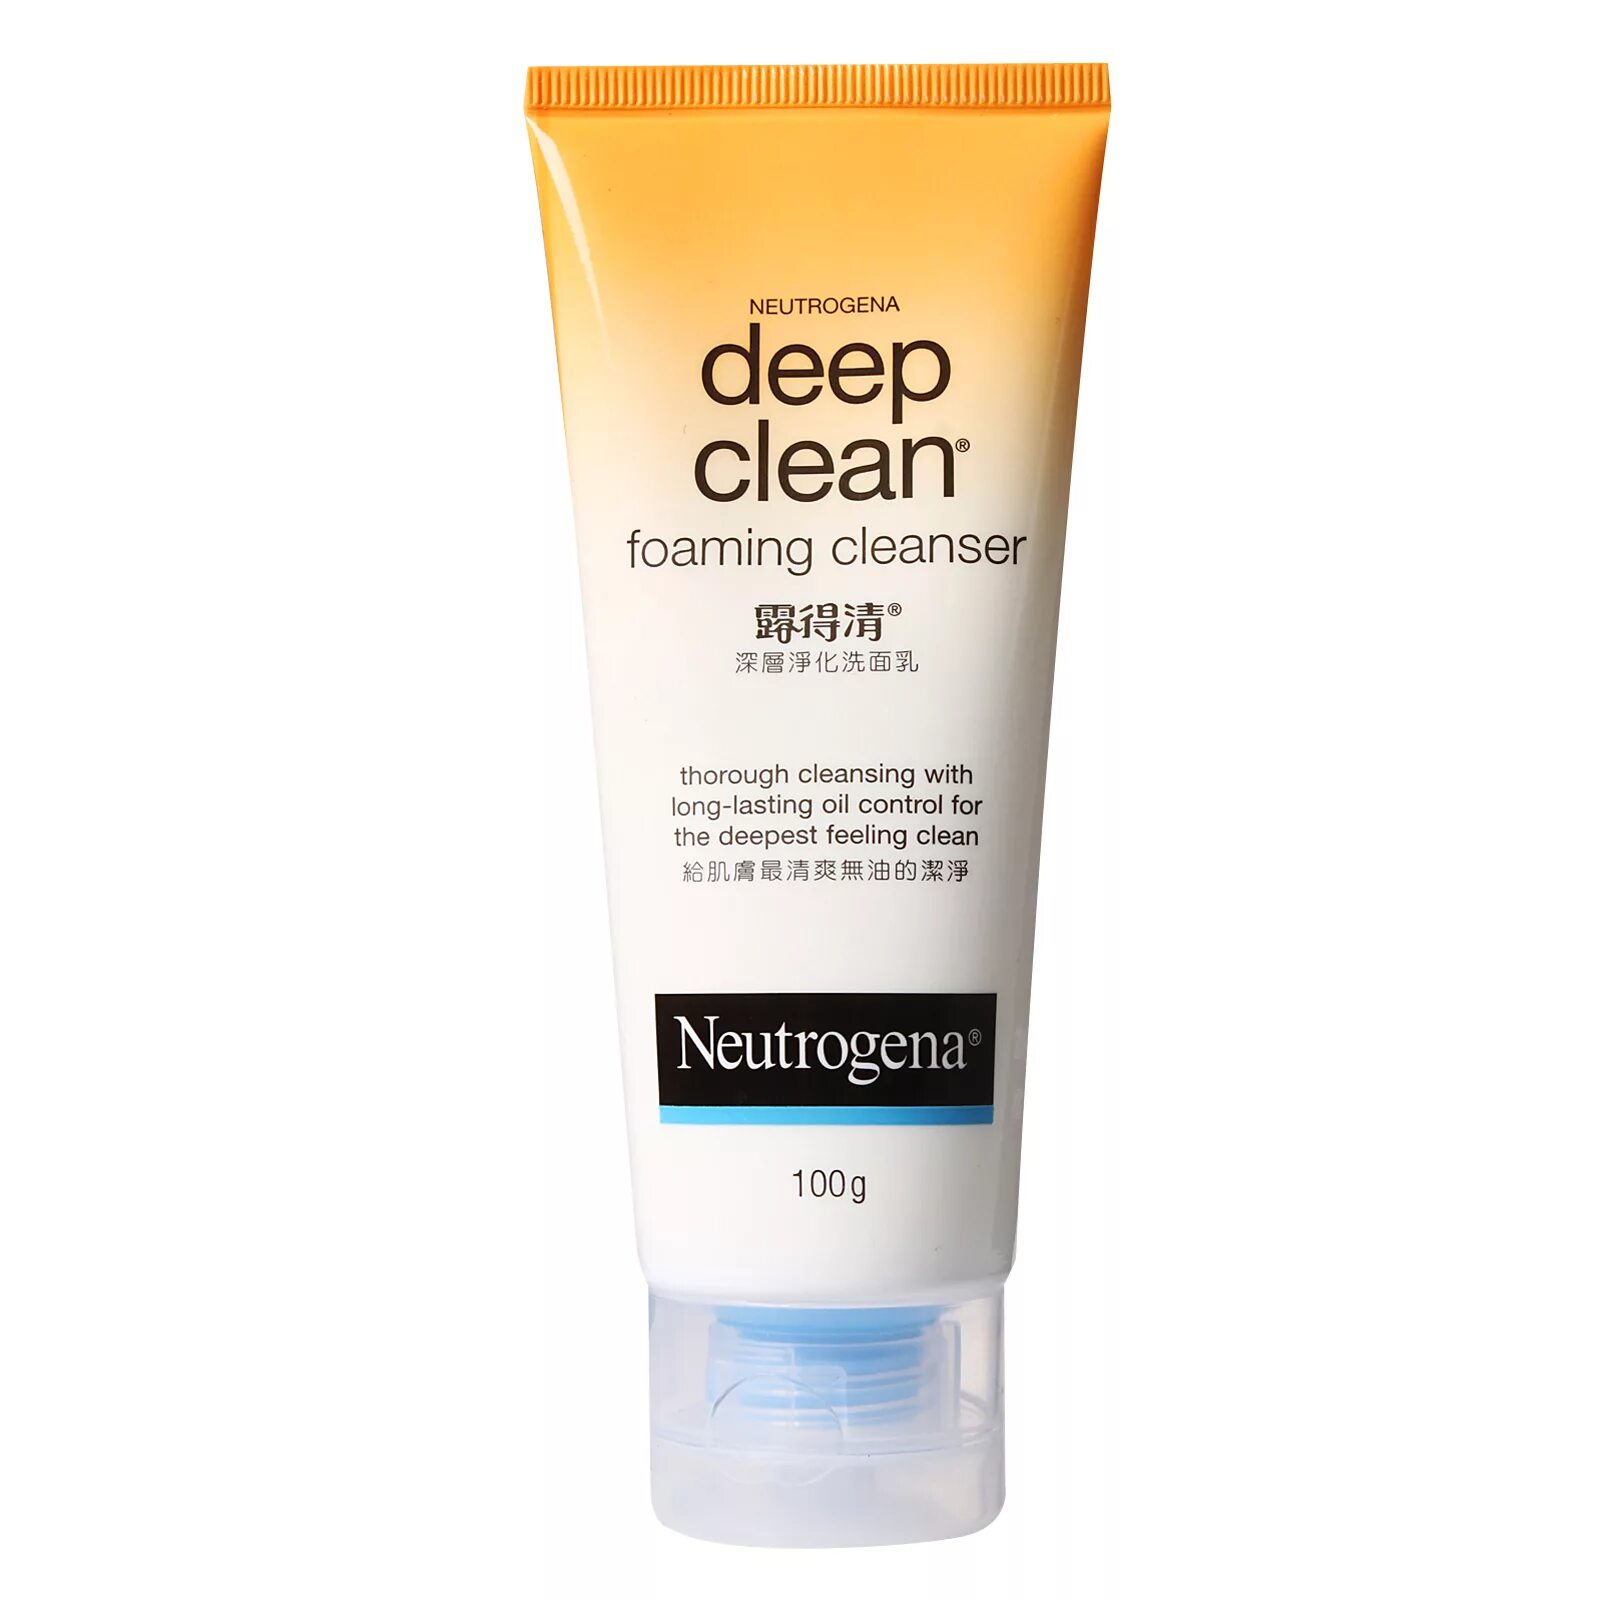 Deep cleanser foam. Deep clean Foam Cleanser Neutrogena. Neutrogena acne Foam Cleanser. Neutrogena Foaming Cleanser гель. Neutrogena Deep clean acne Foam Cleanser.